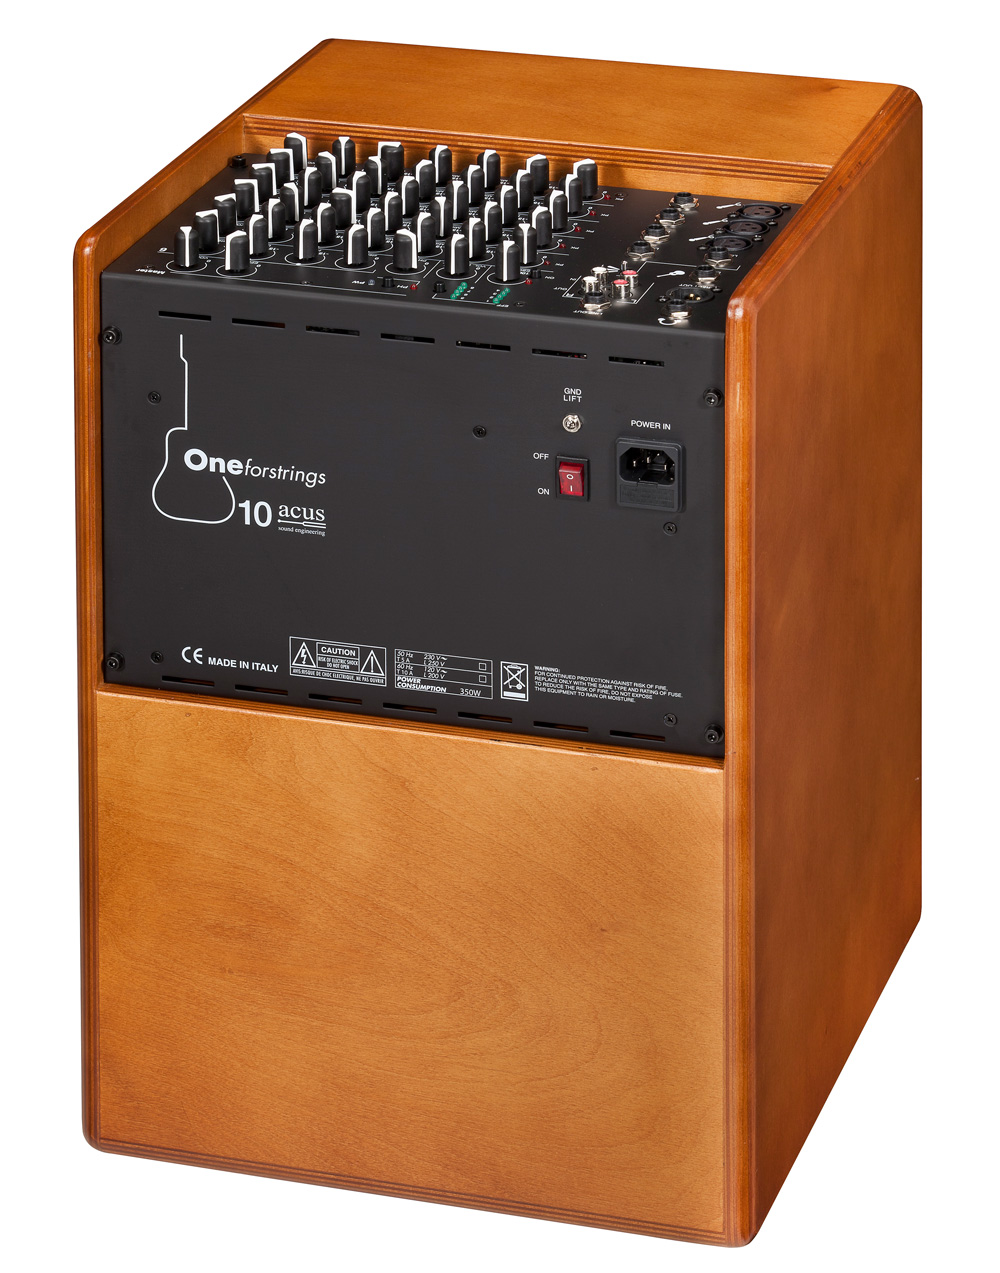 Acus One Forstrings 10 Ad 280+70w 2x8 Wood - Combo amplificador acústico - Variation 1